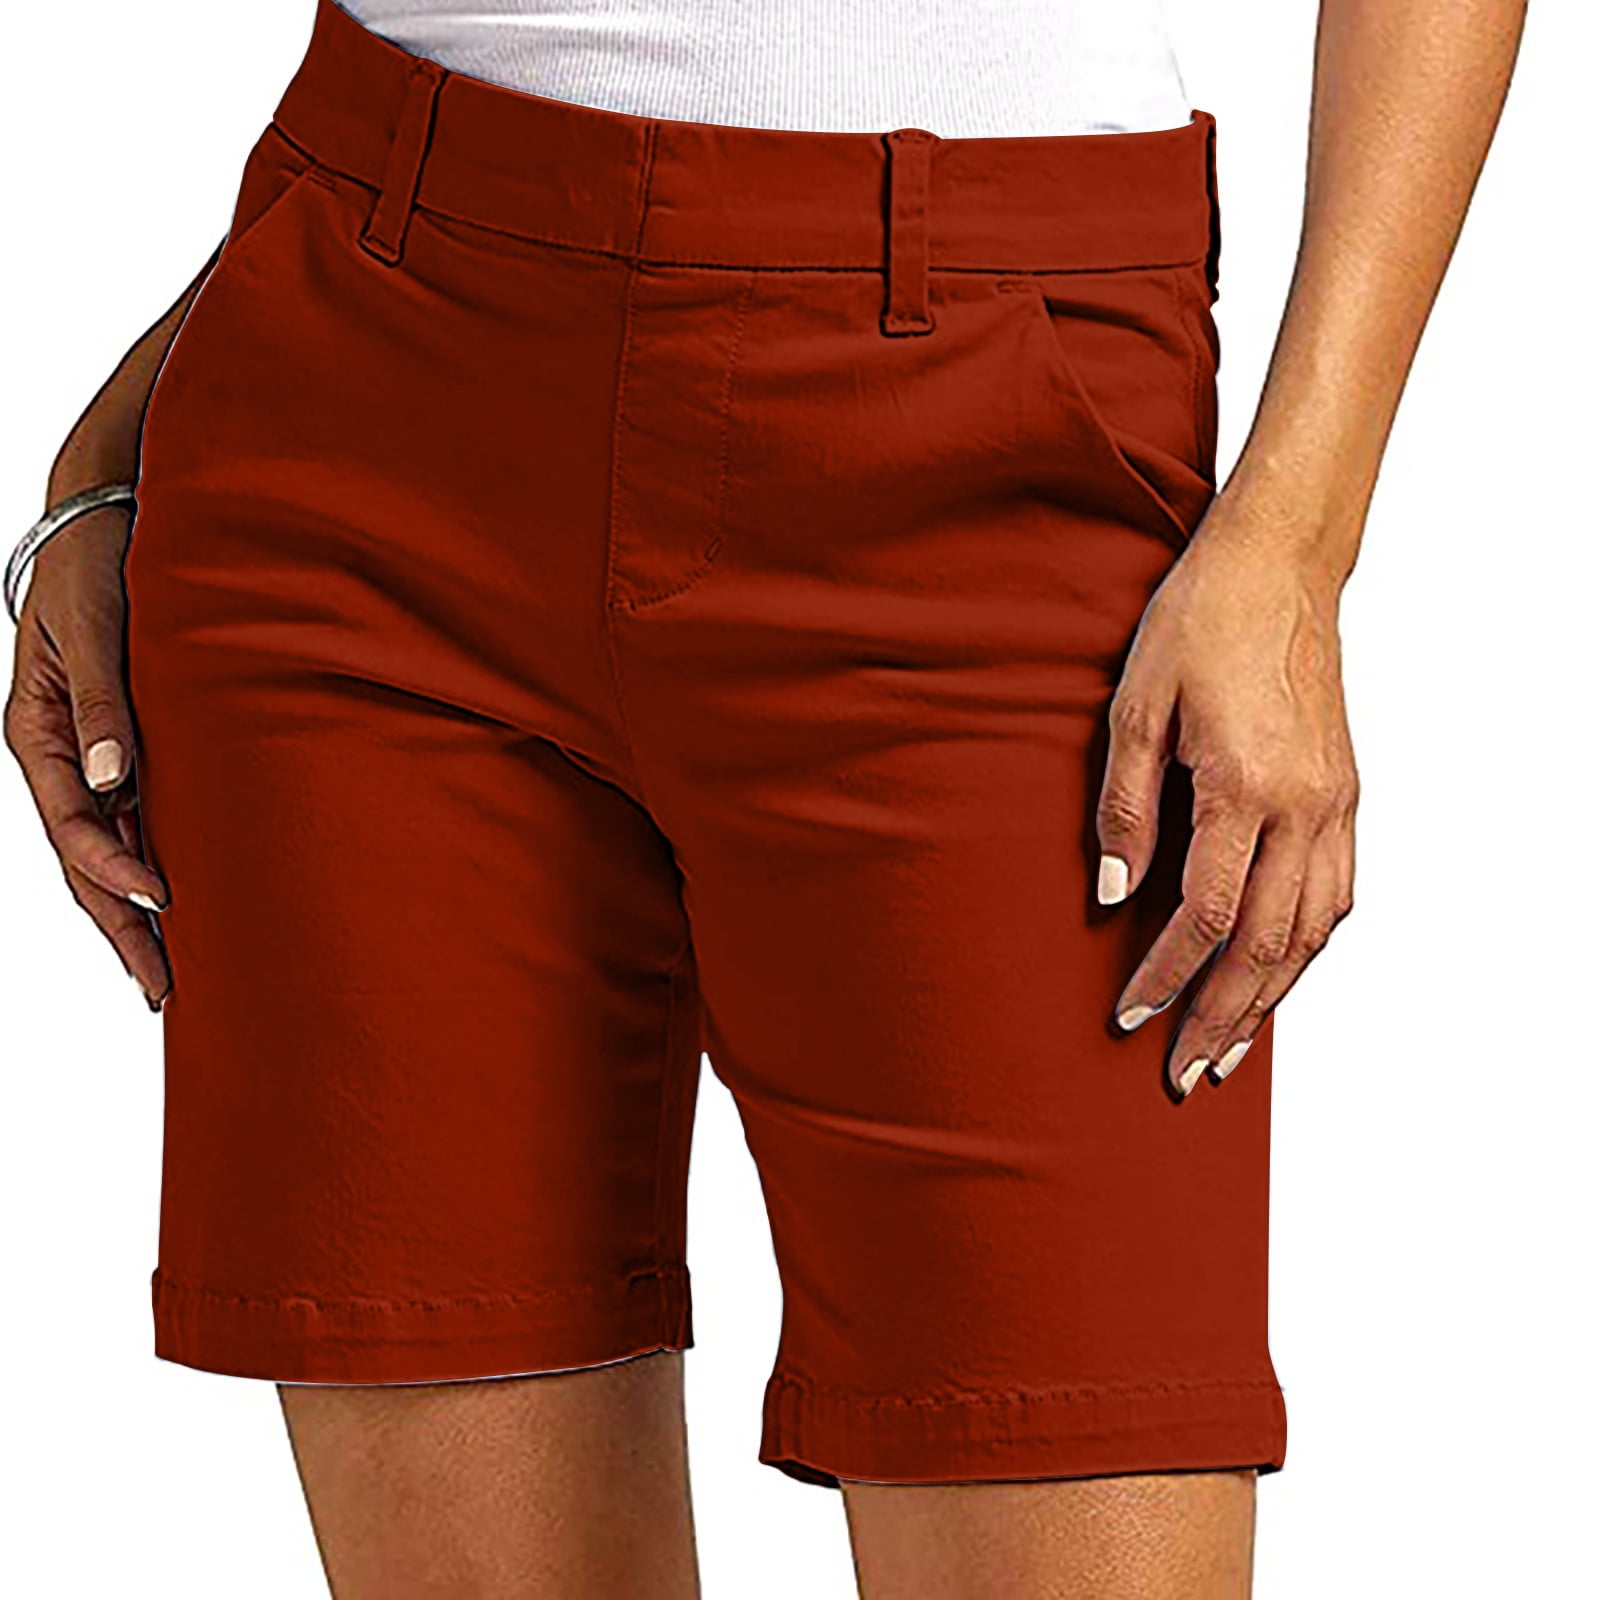 Homenesgenics Womens Stretch Twill Shorts Plus Size Thin Waist Pull On ...